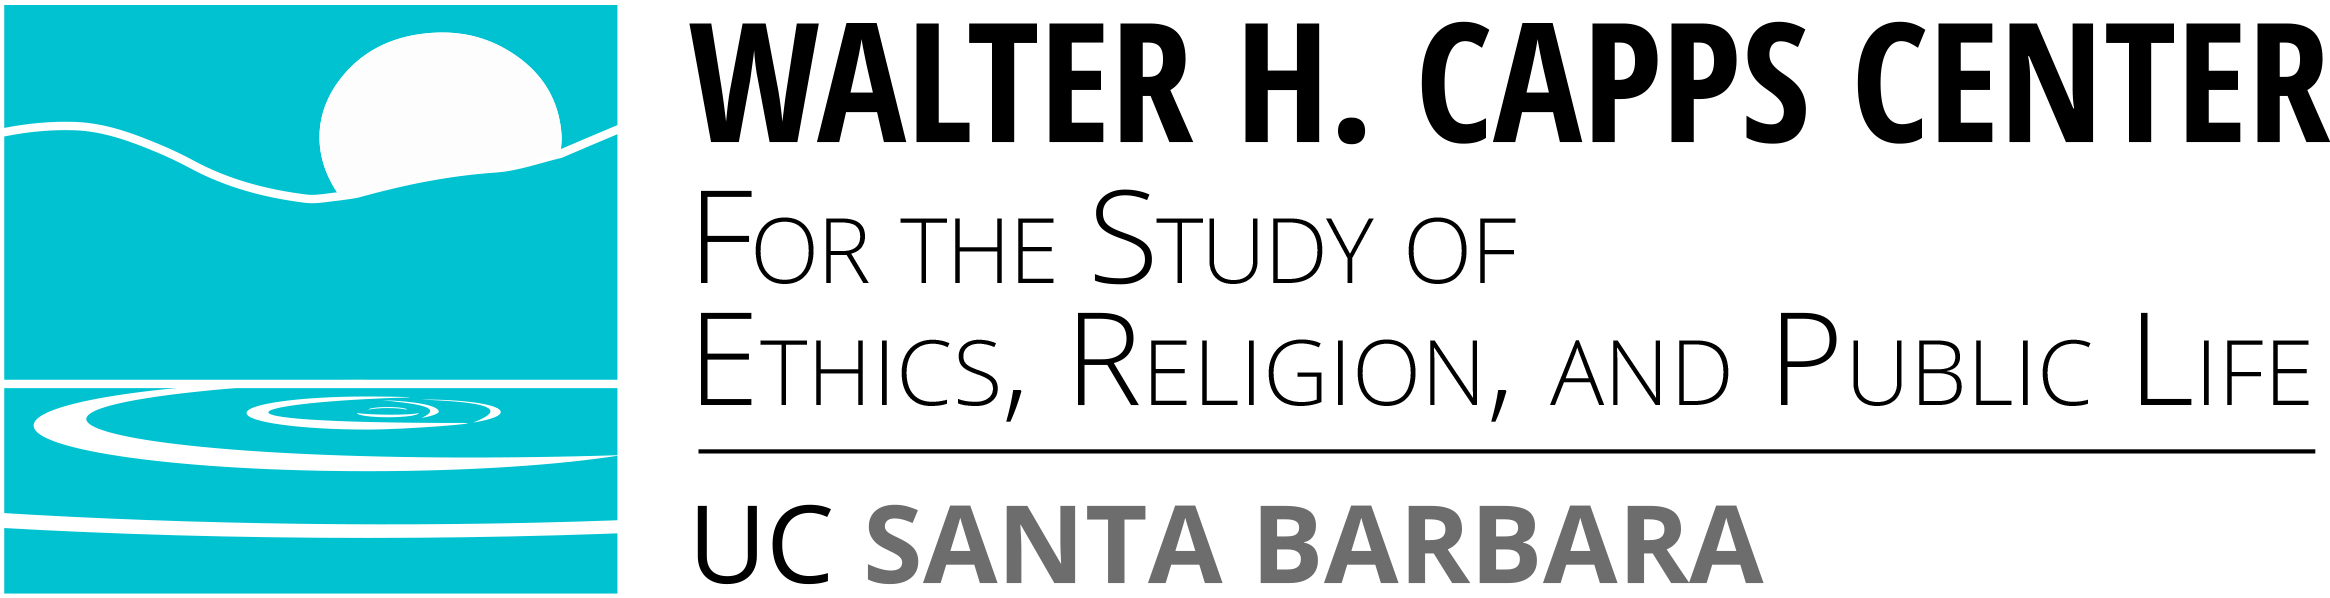 Walter H. Capps Center - UC Santa Barbara